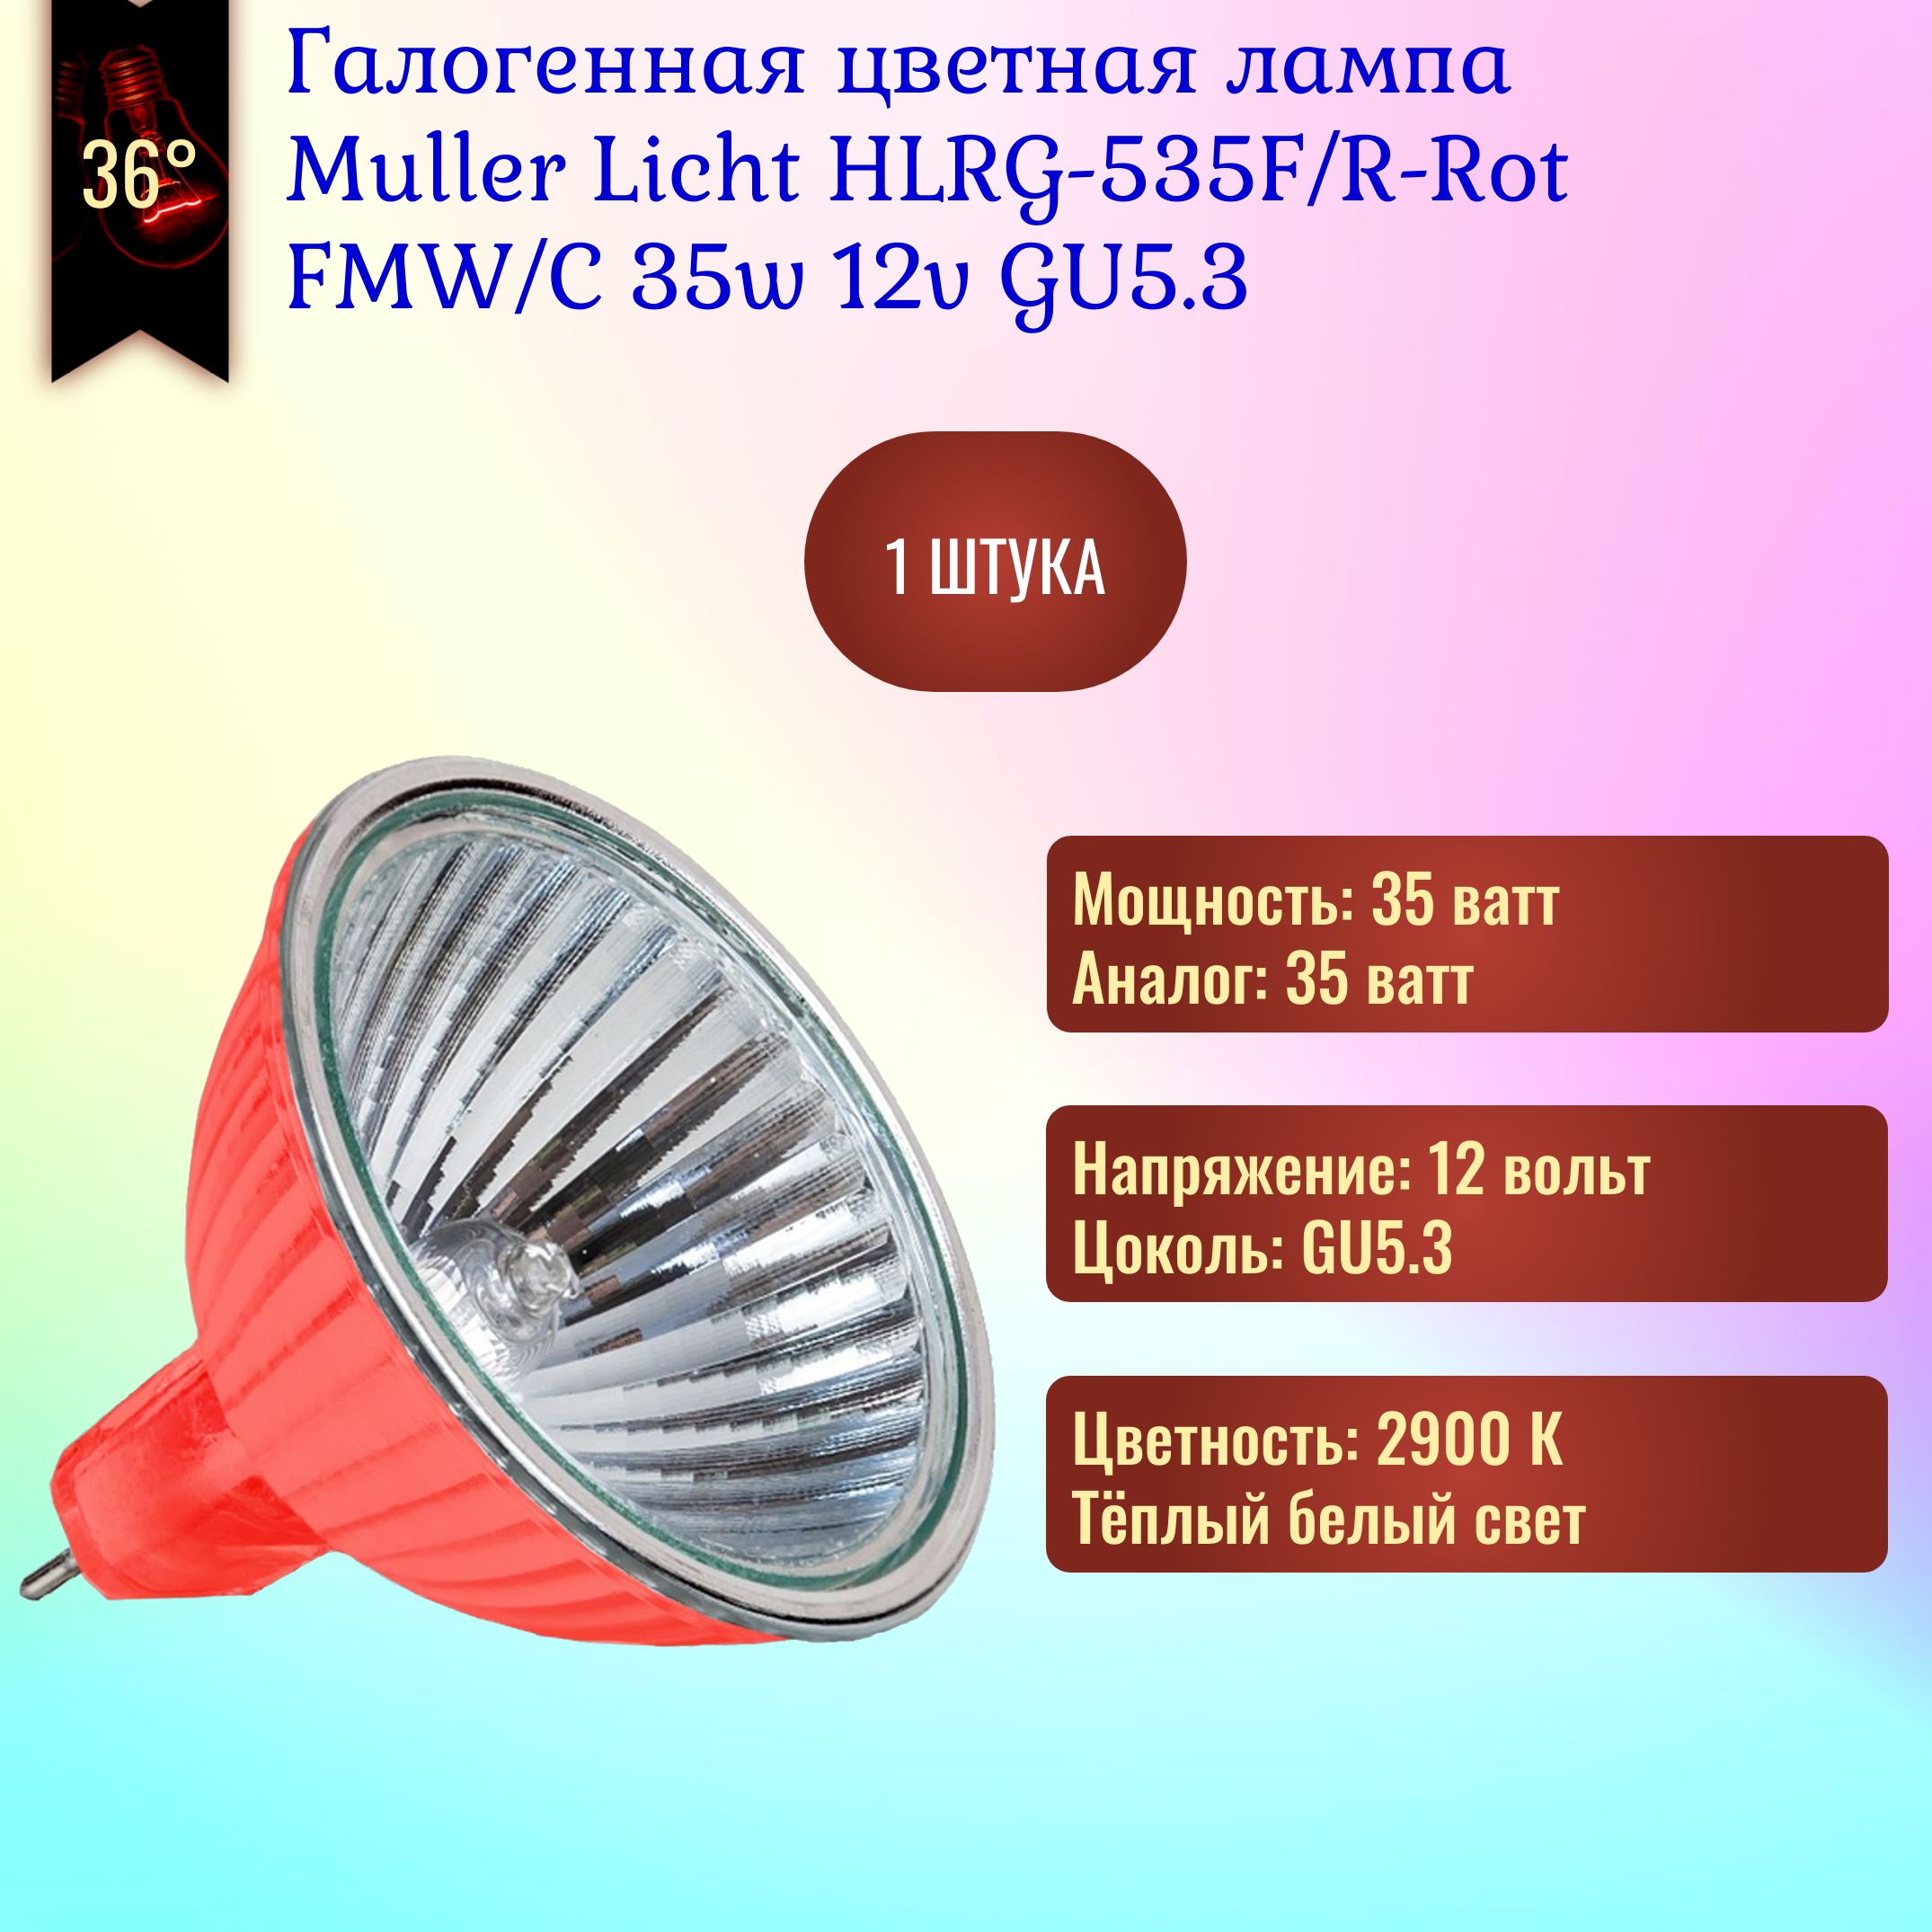 Лампочка Muller Licht HLRG-535F/R-Rot 35w 12v GU5.3 галогенная, красный отражатель, теплый белый свет